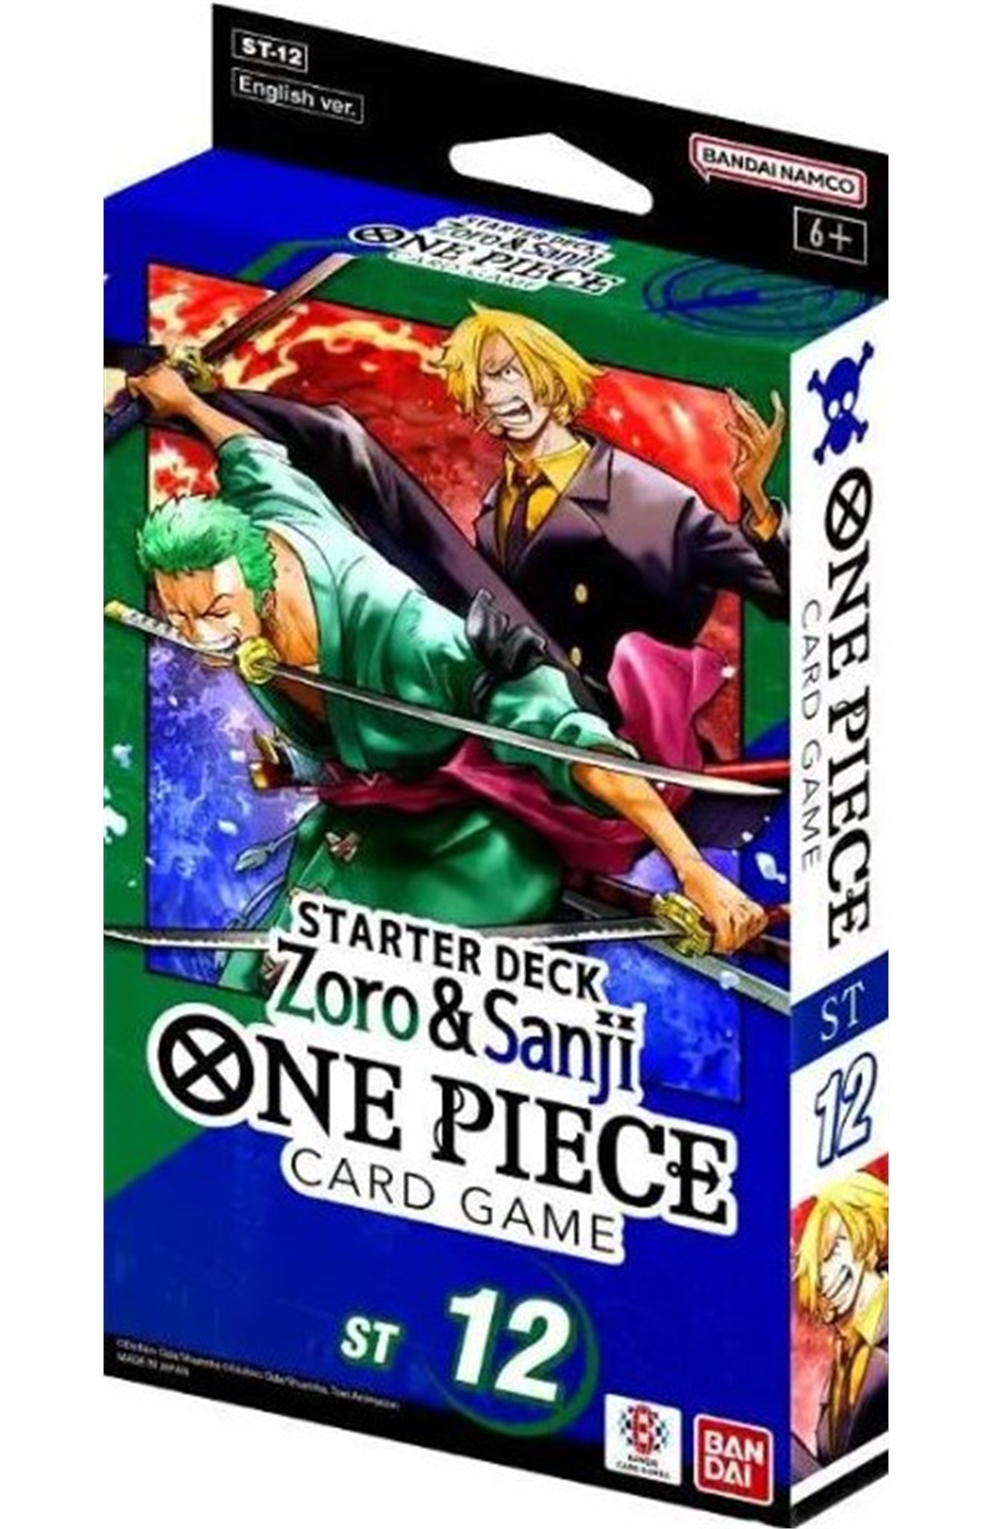 One Piece Tcg: Zoro And Sanji Starter Deck [St-12]